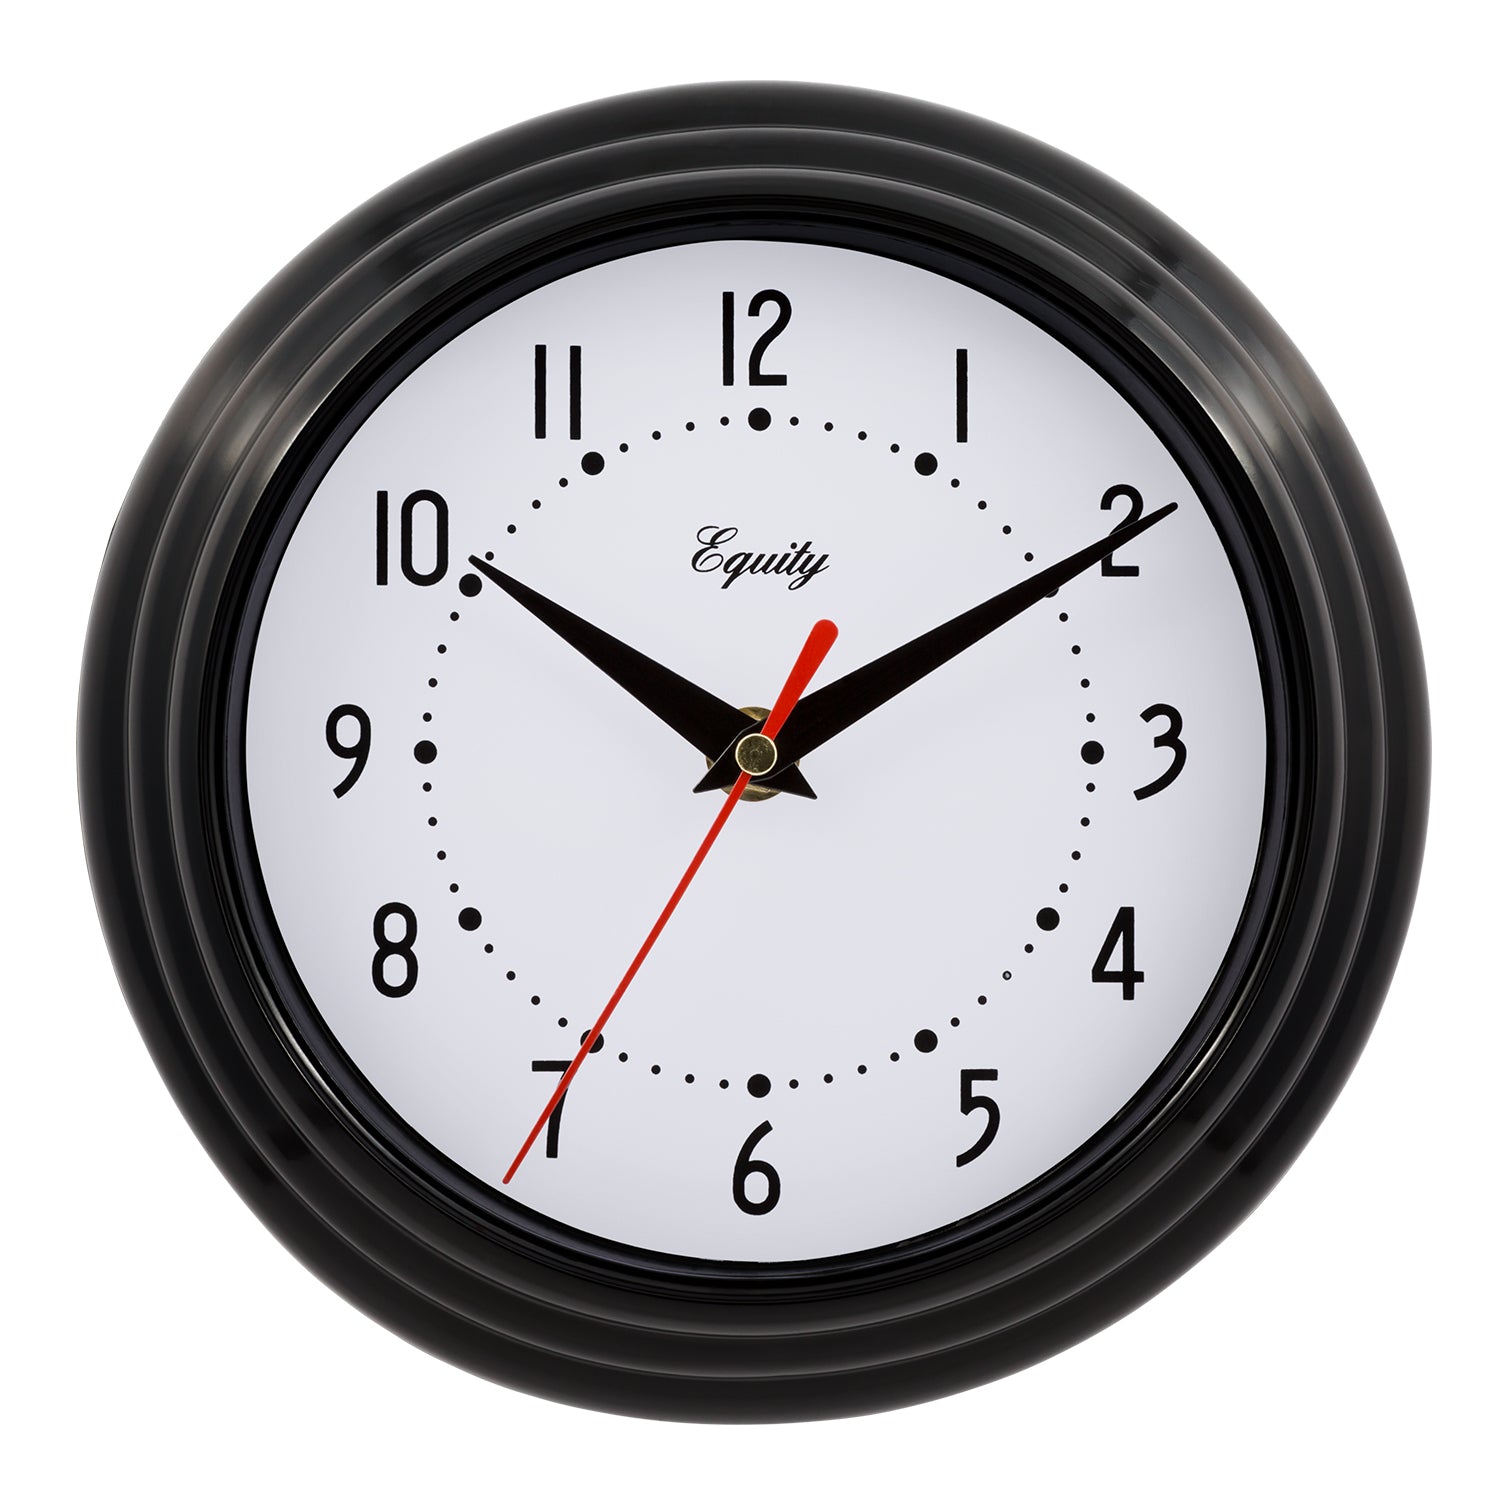 25016 8-inch Analog Wall Clock